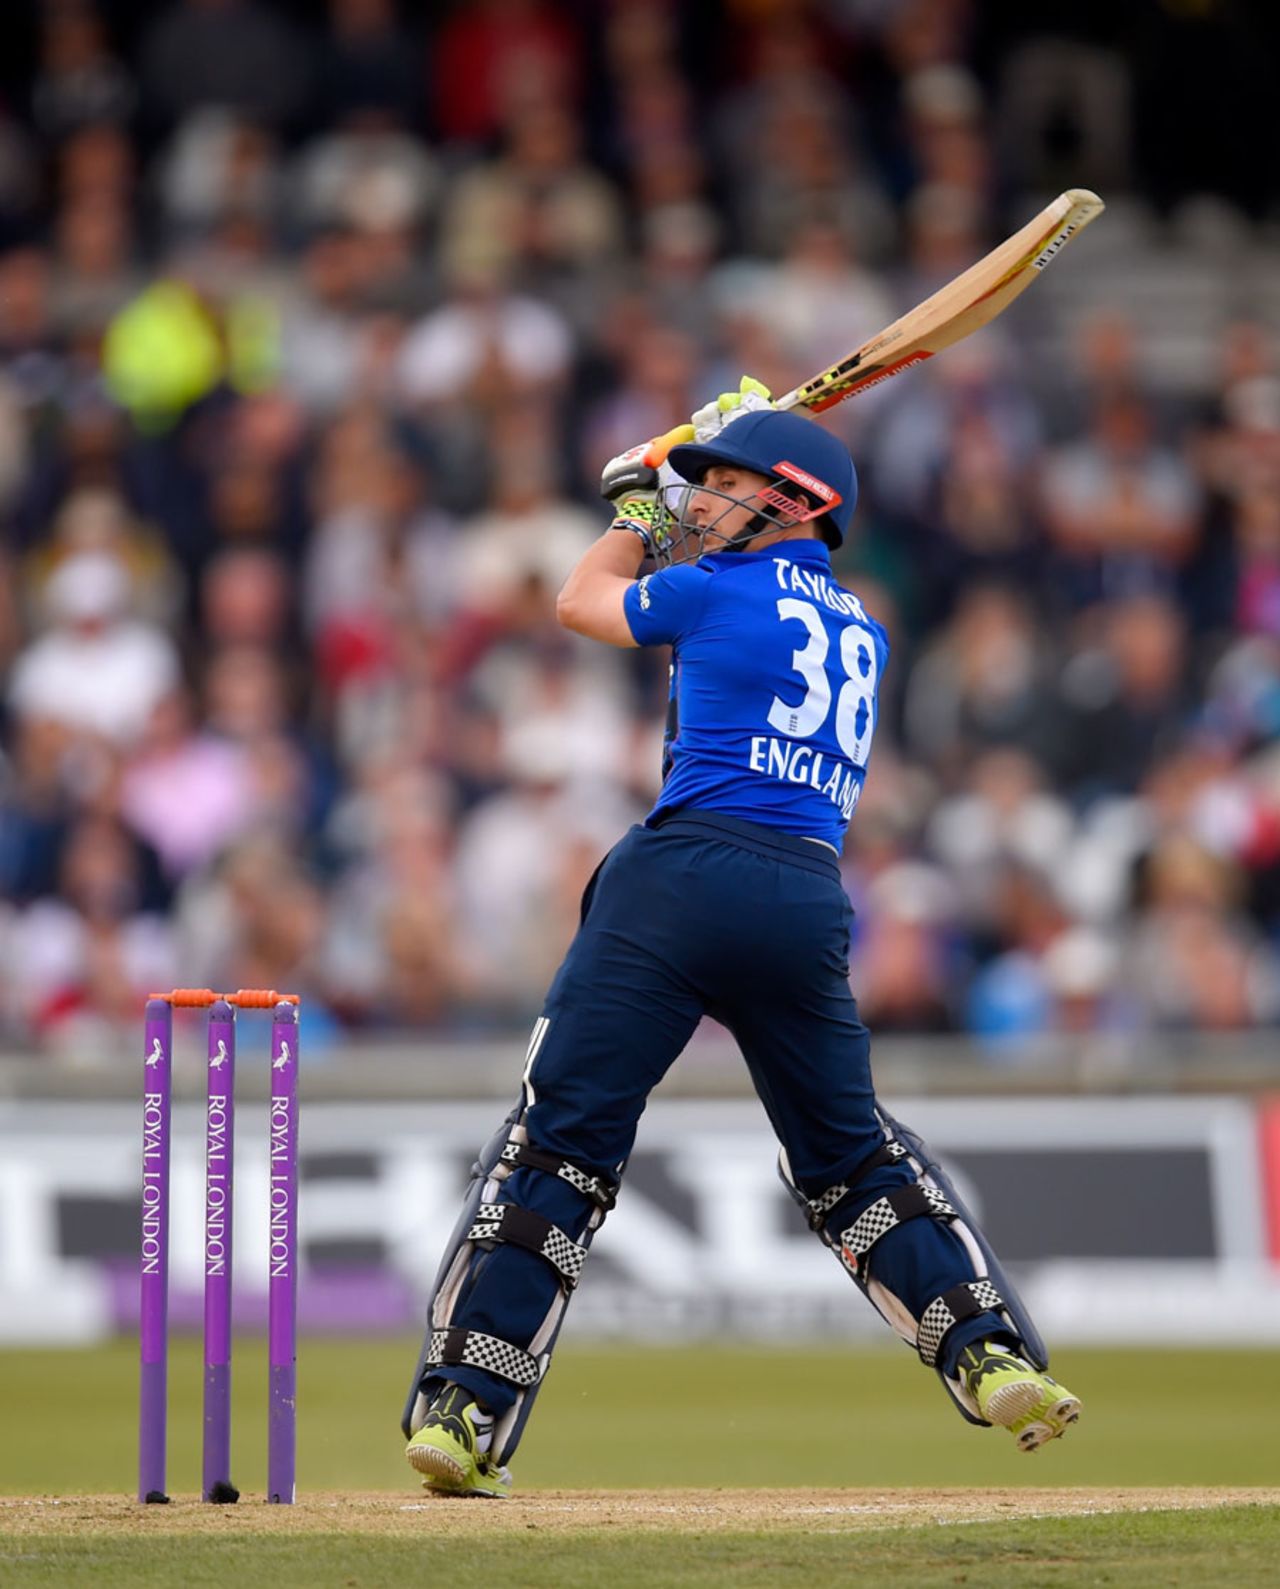 James Taylor got his innings off to a rapid start, England v Australia, 4th ODI, Headingley, September 11, 2015